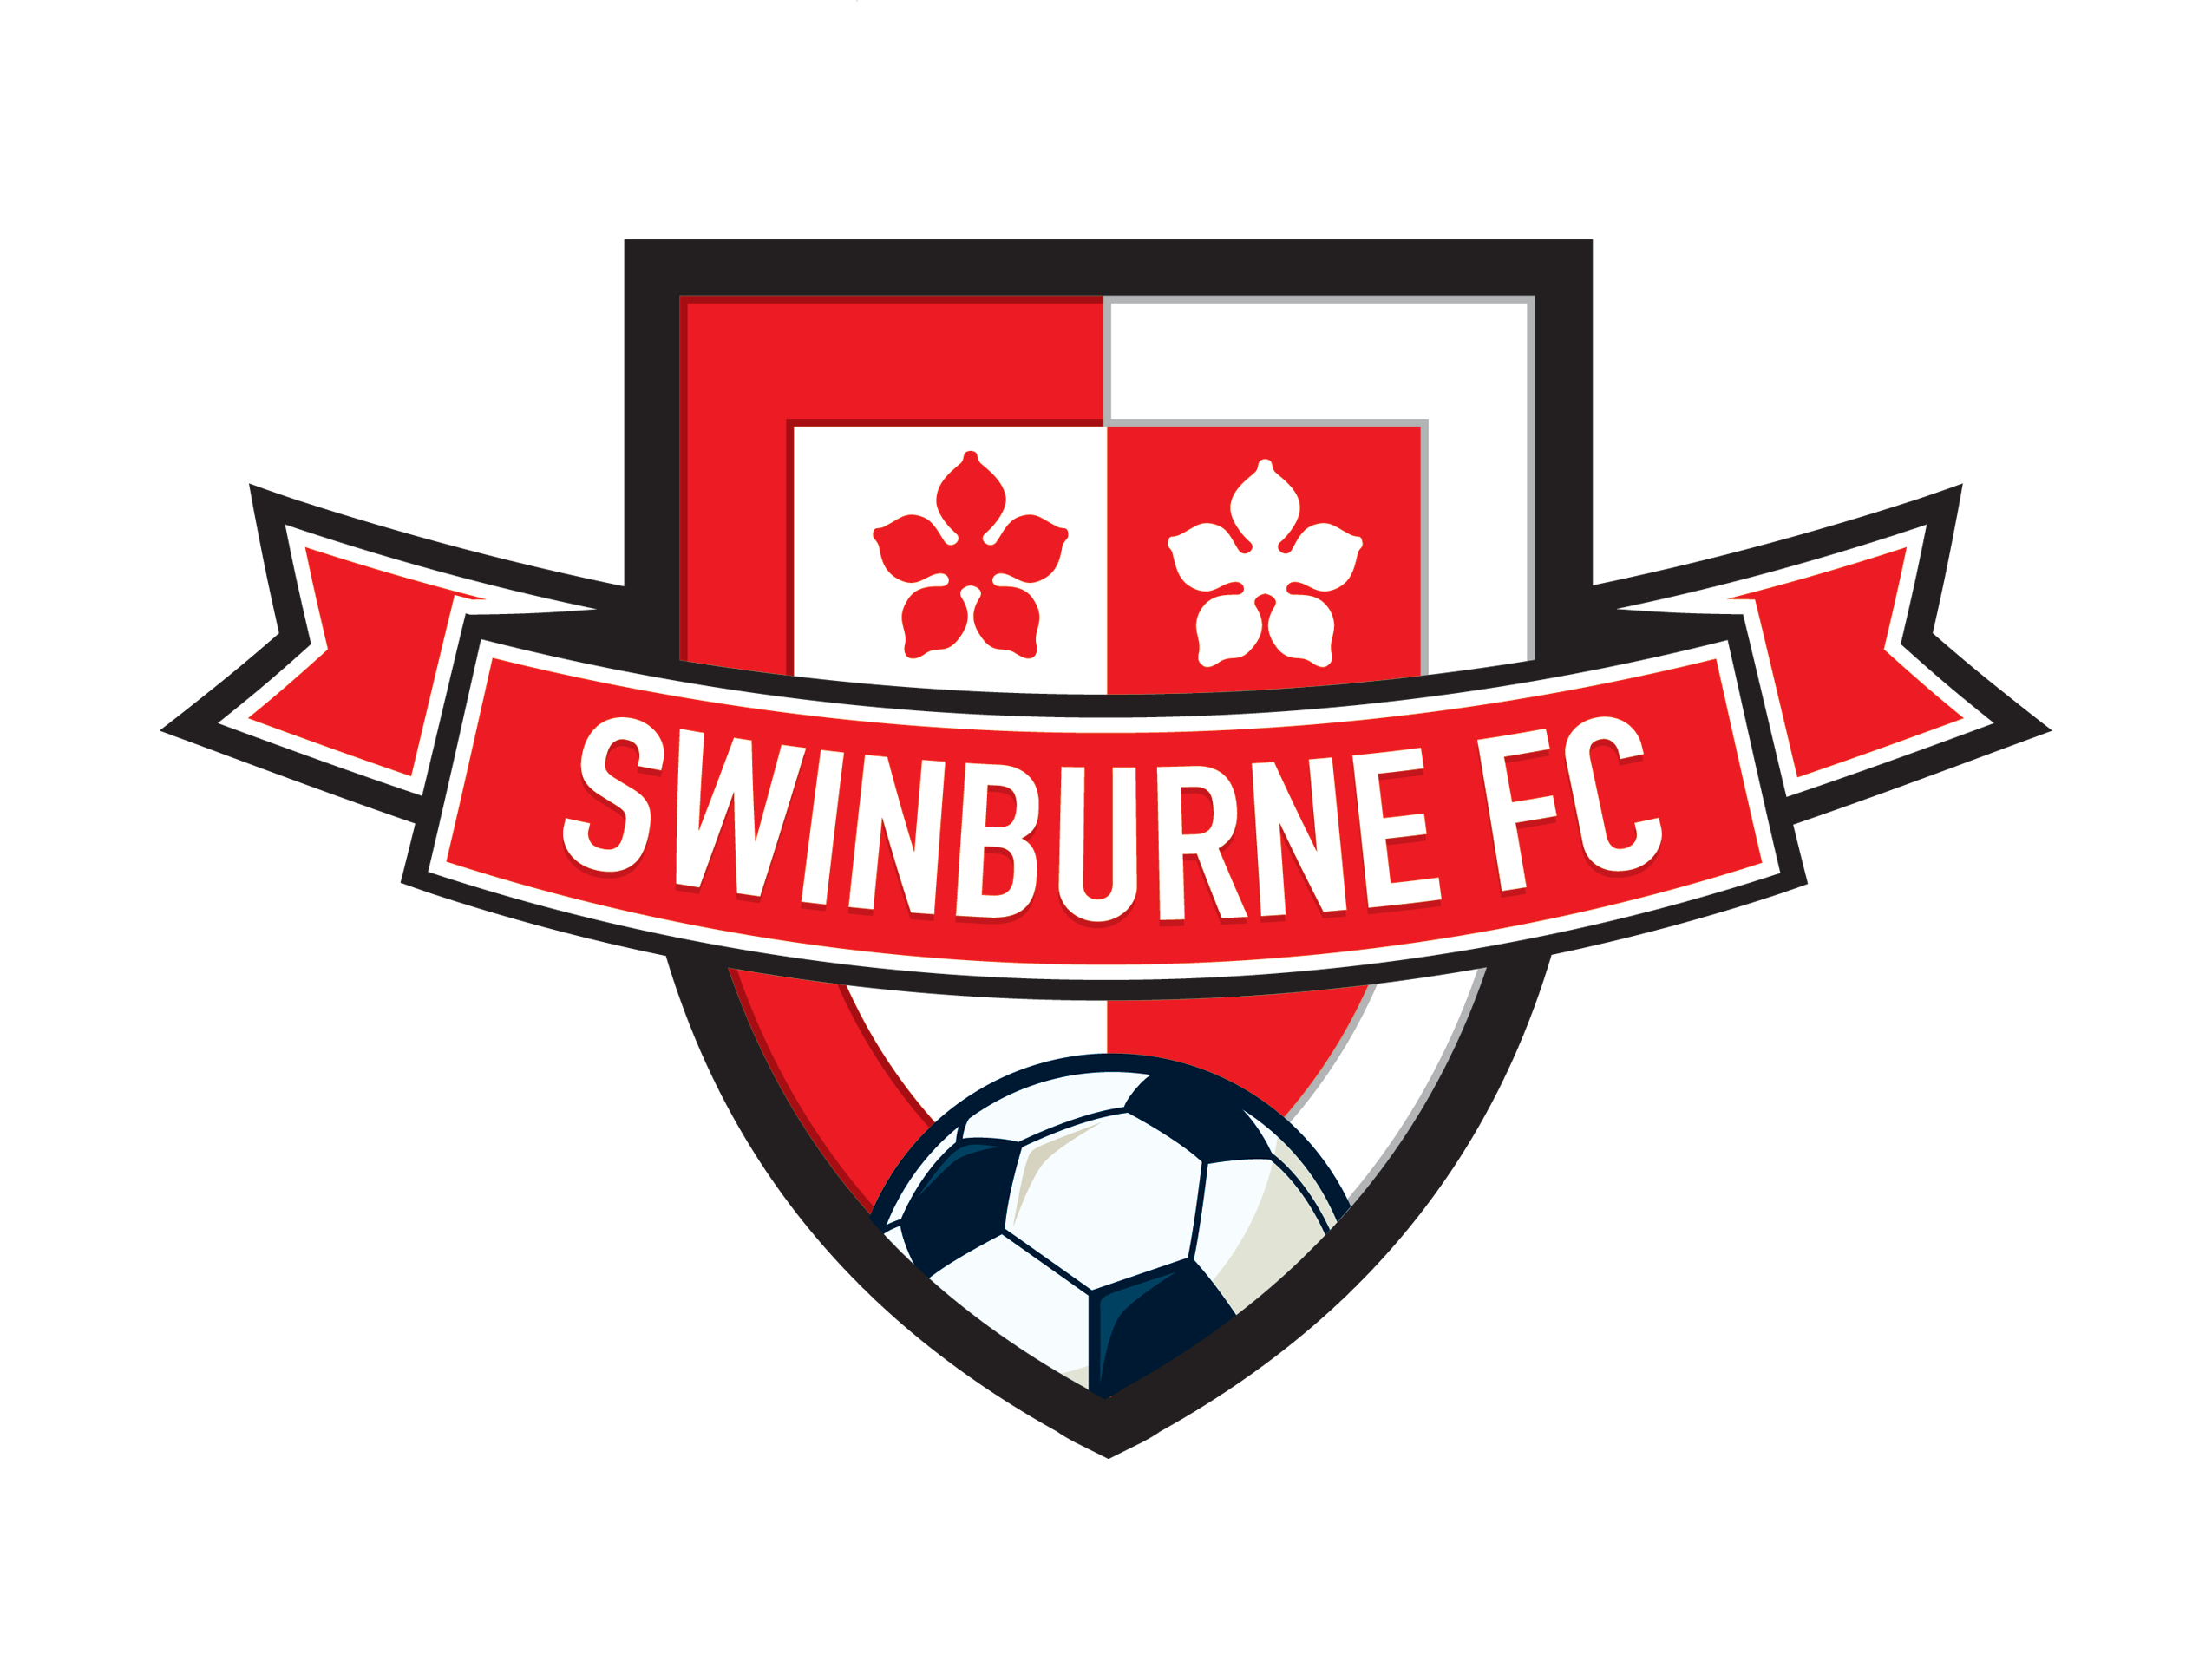 Swinburne FC